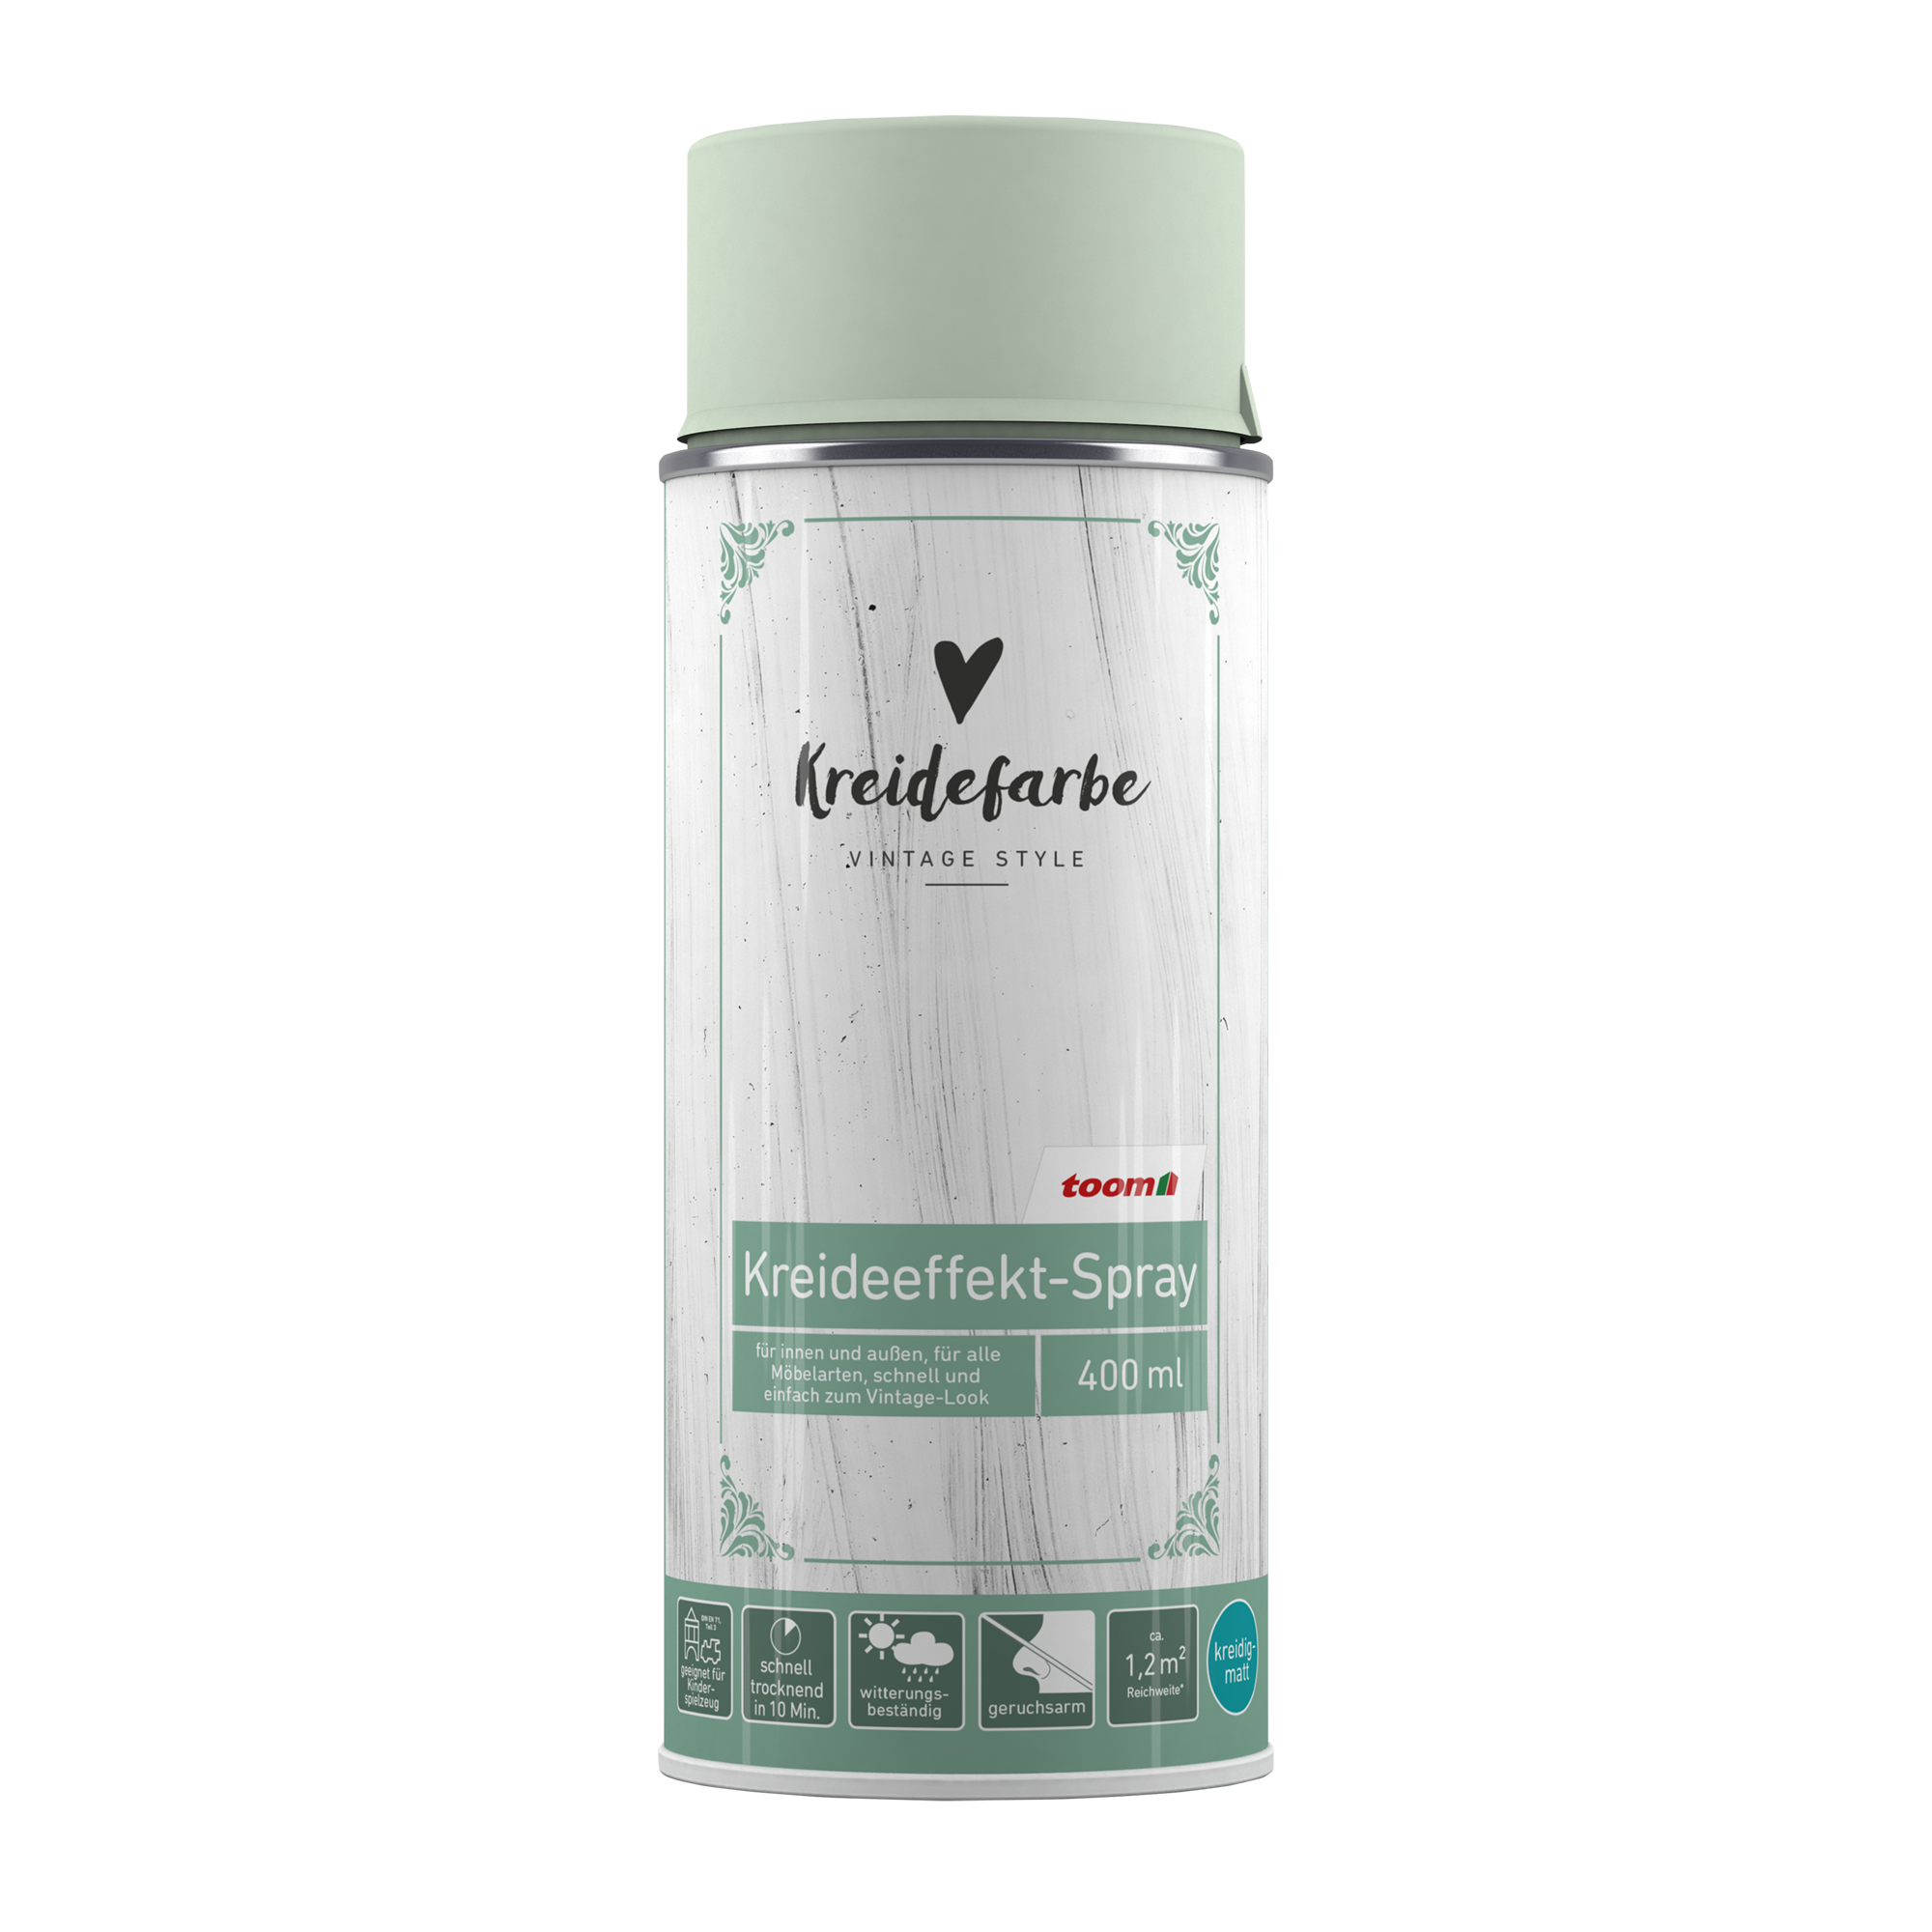 Kreideeffekt-Spray salbeigrün matt 400 ml + product picture